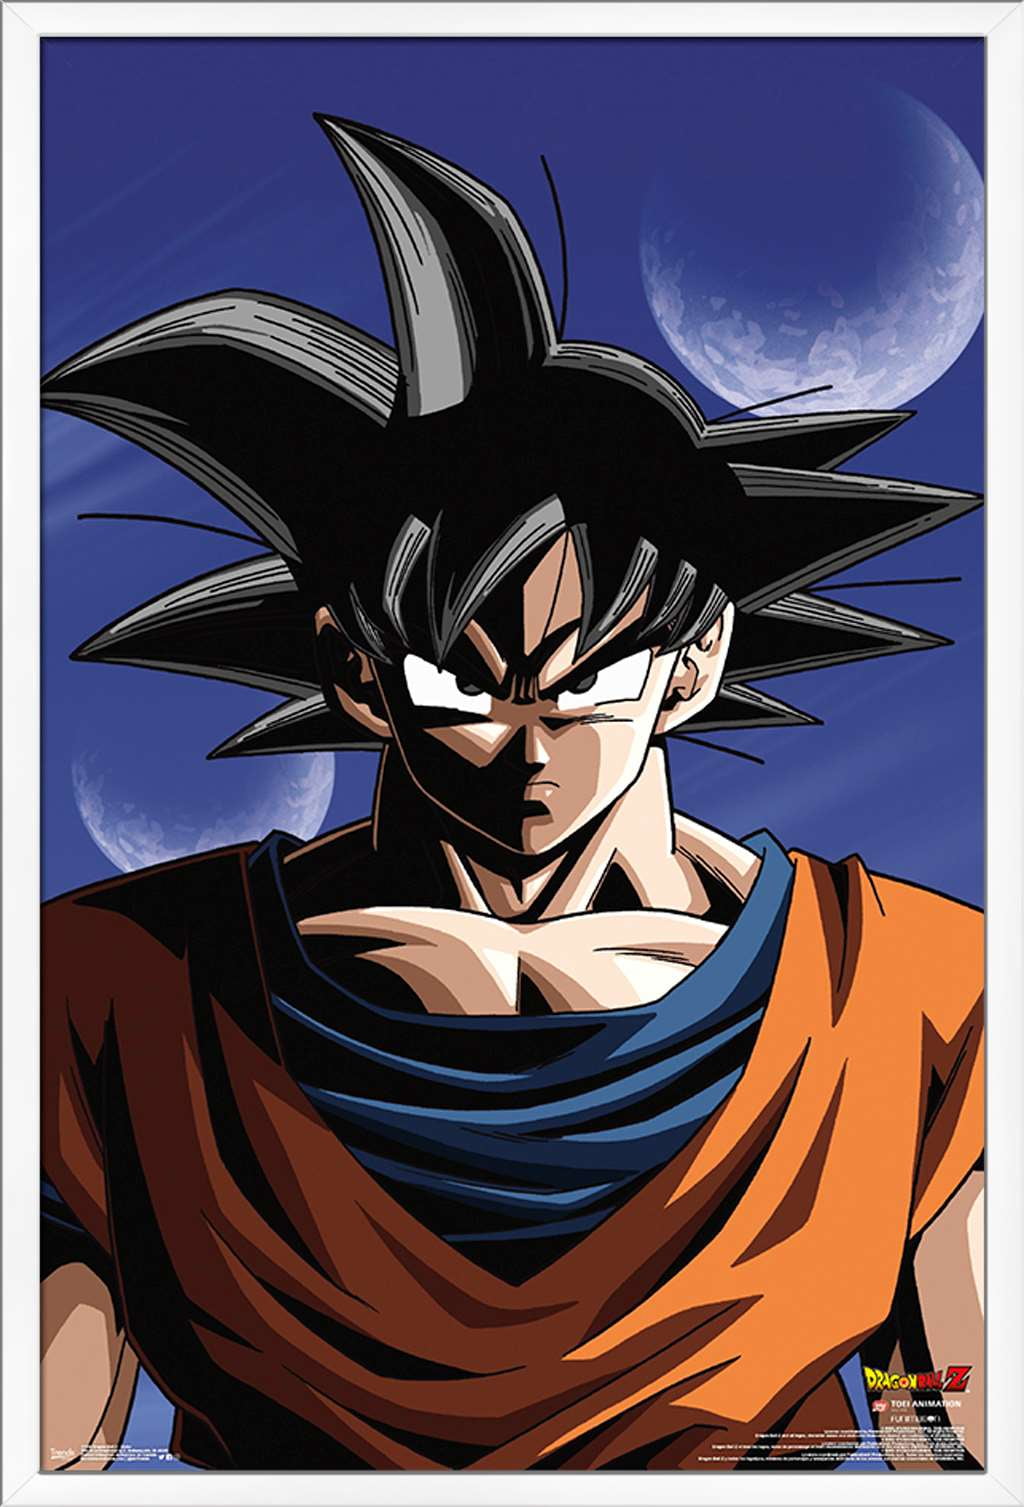 Dragon Ball Z - Goku Poster - Walmart.com - Walmart.com